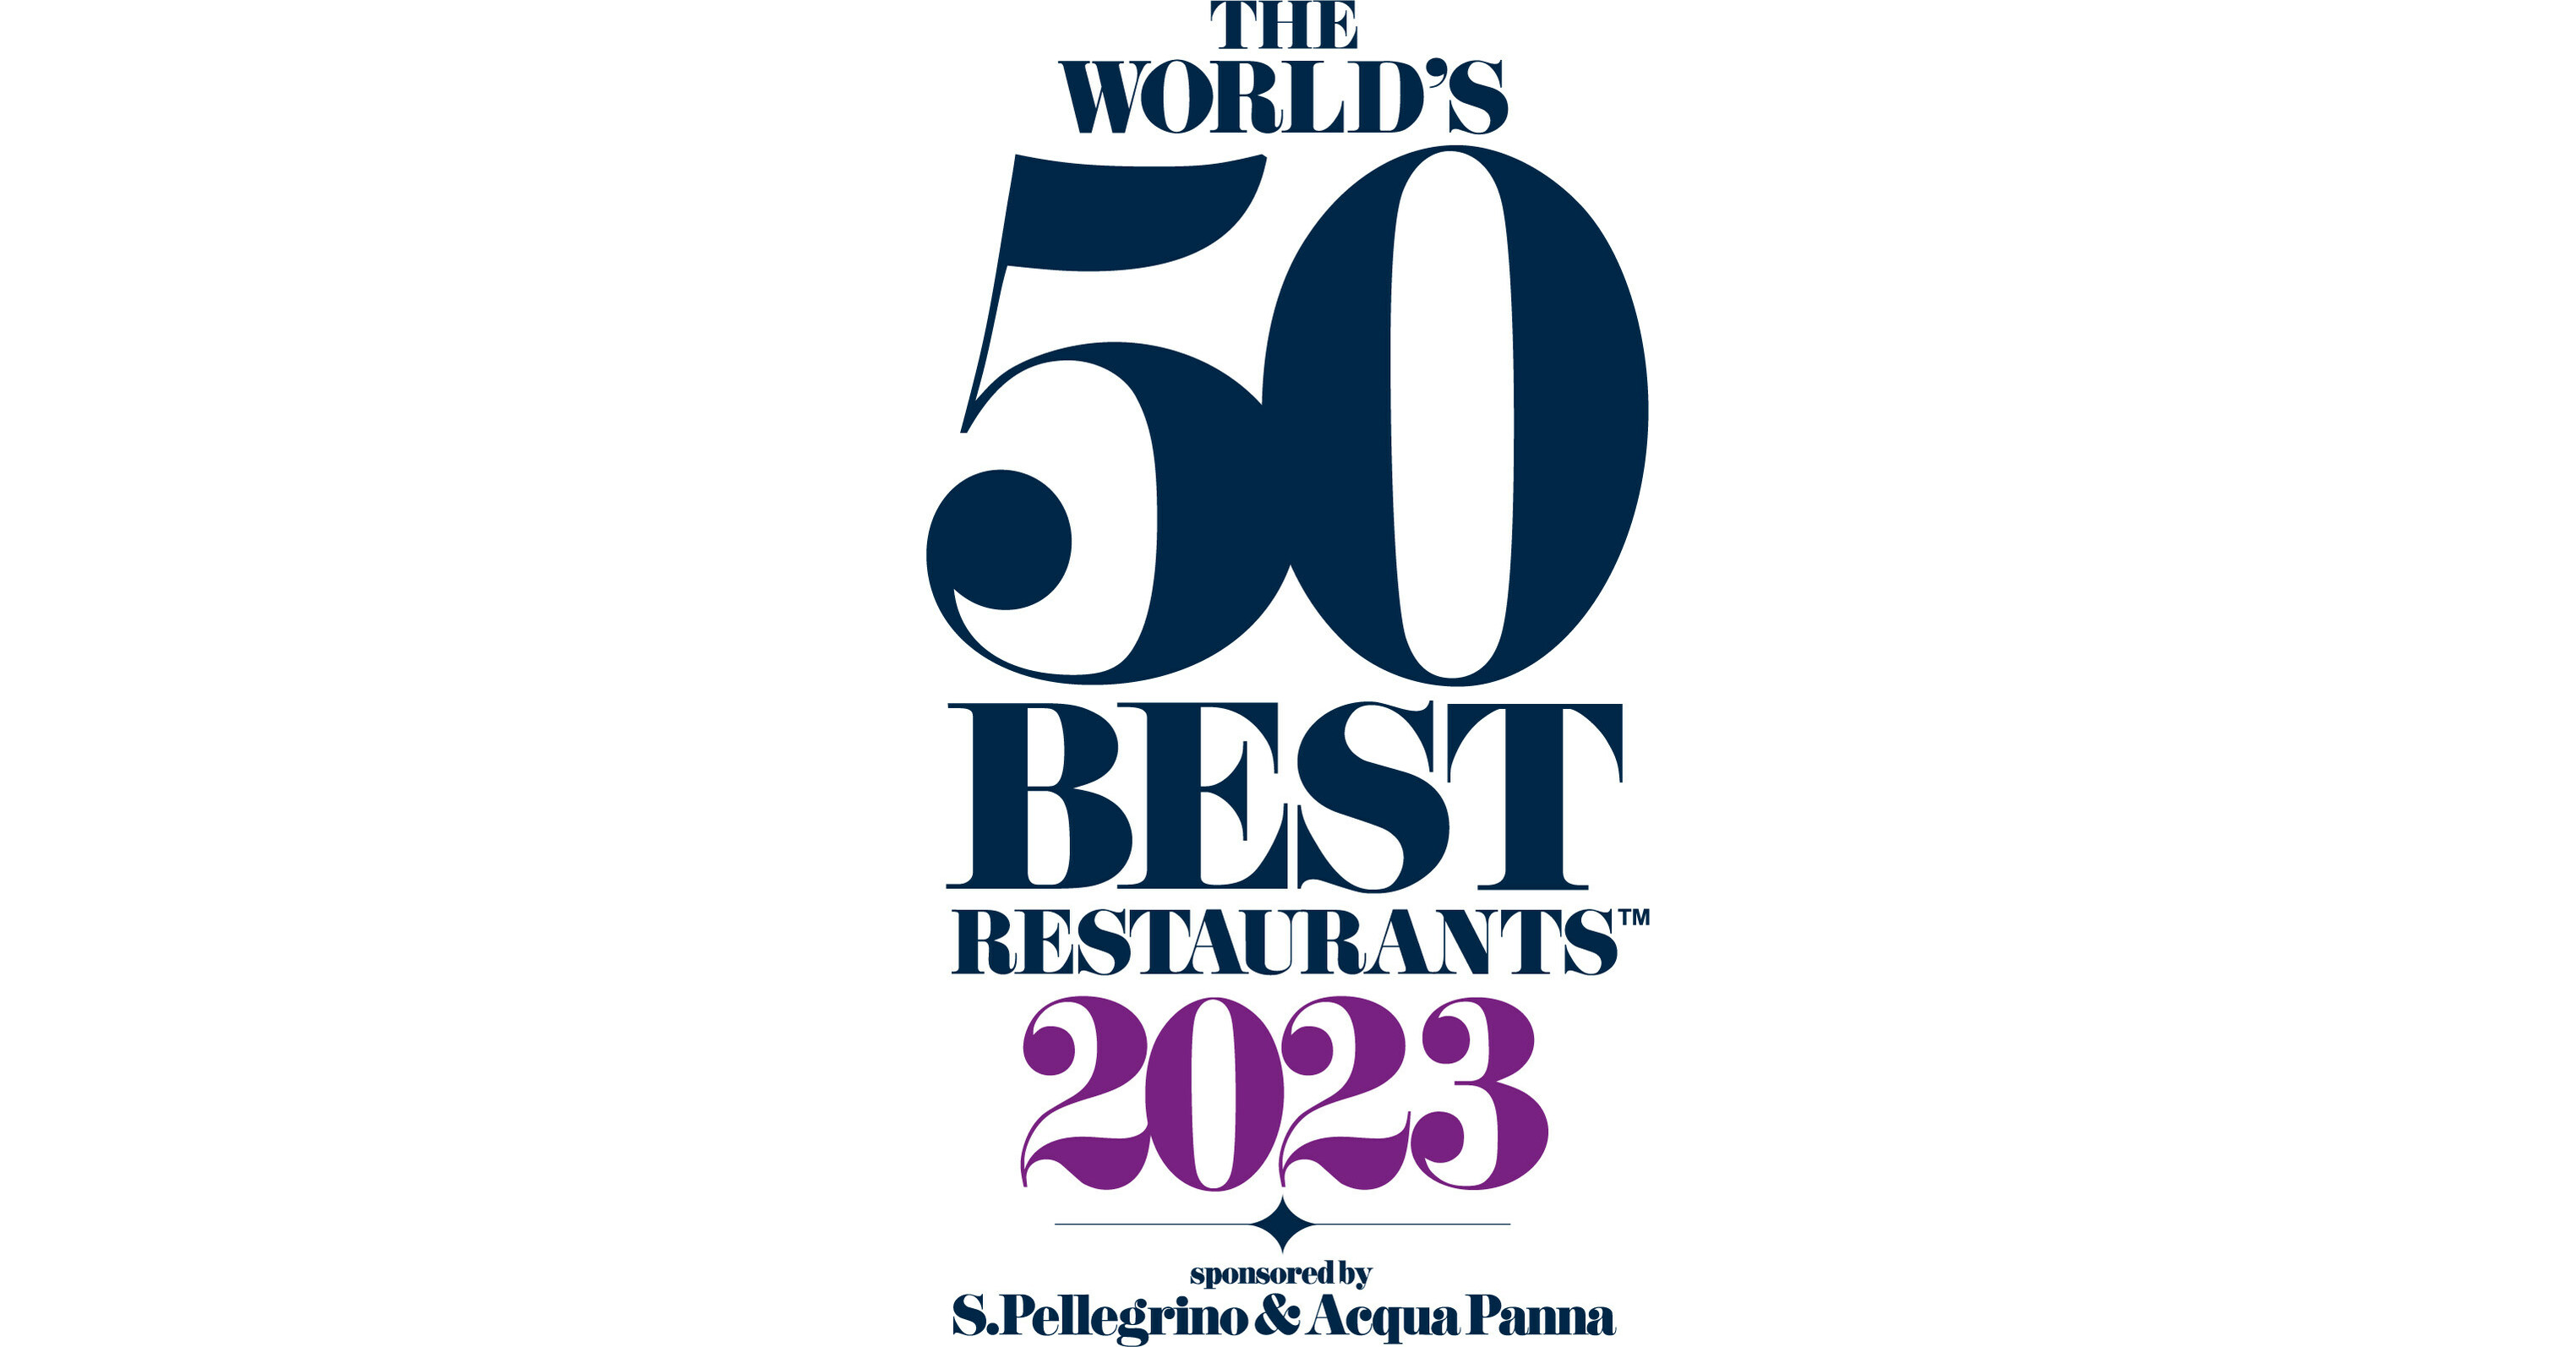 Central, The World's 50 Best Restaurants 2023